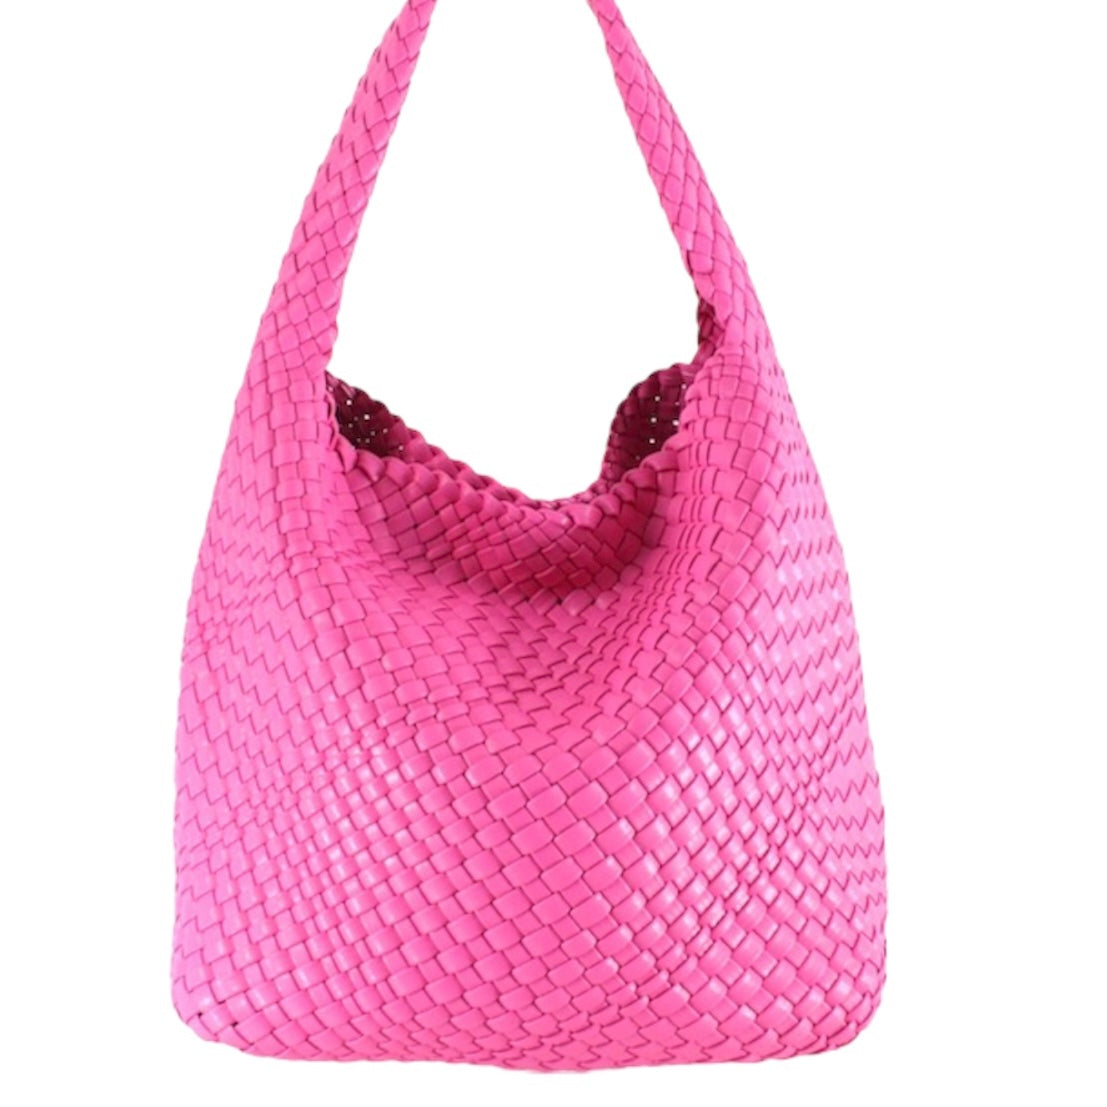 BROOKLYN WOVEN BAG - Hot Pink